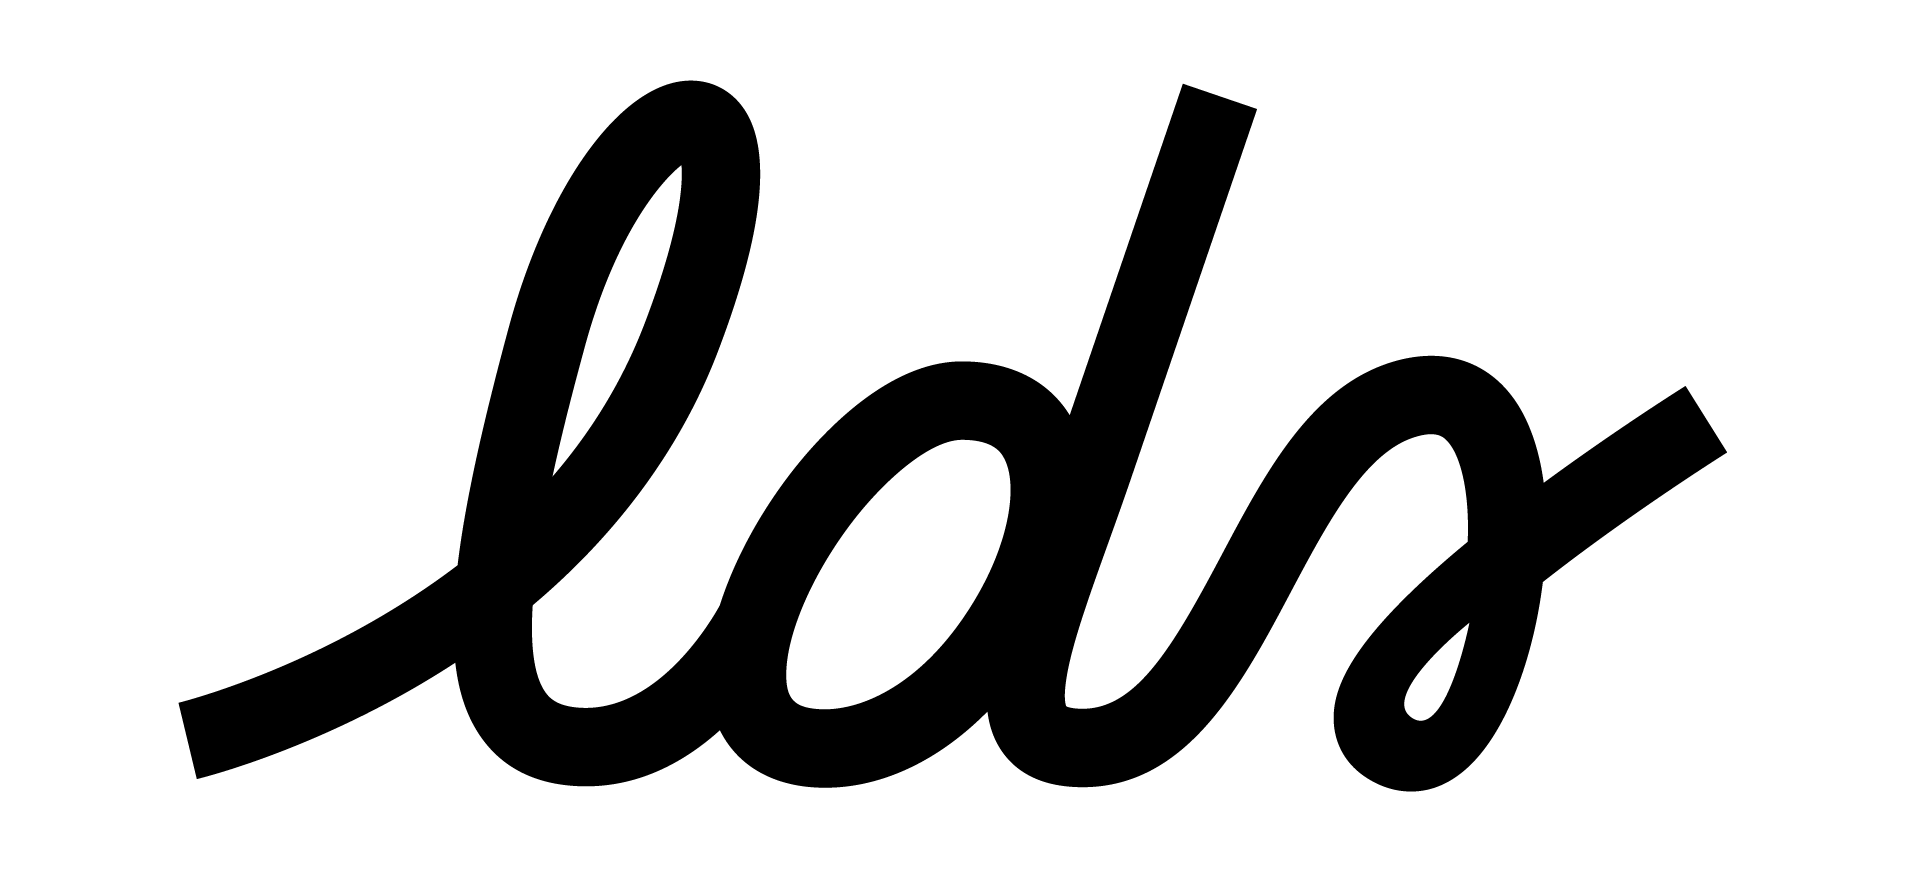 LDS graphic design logo